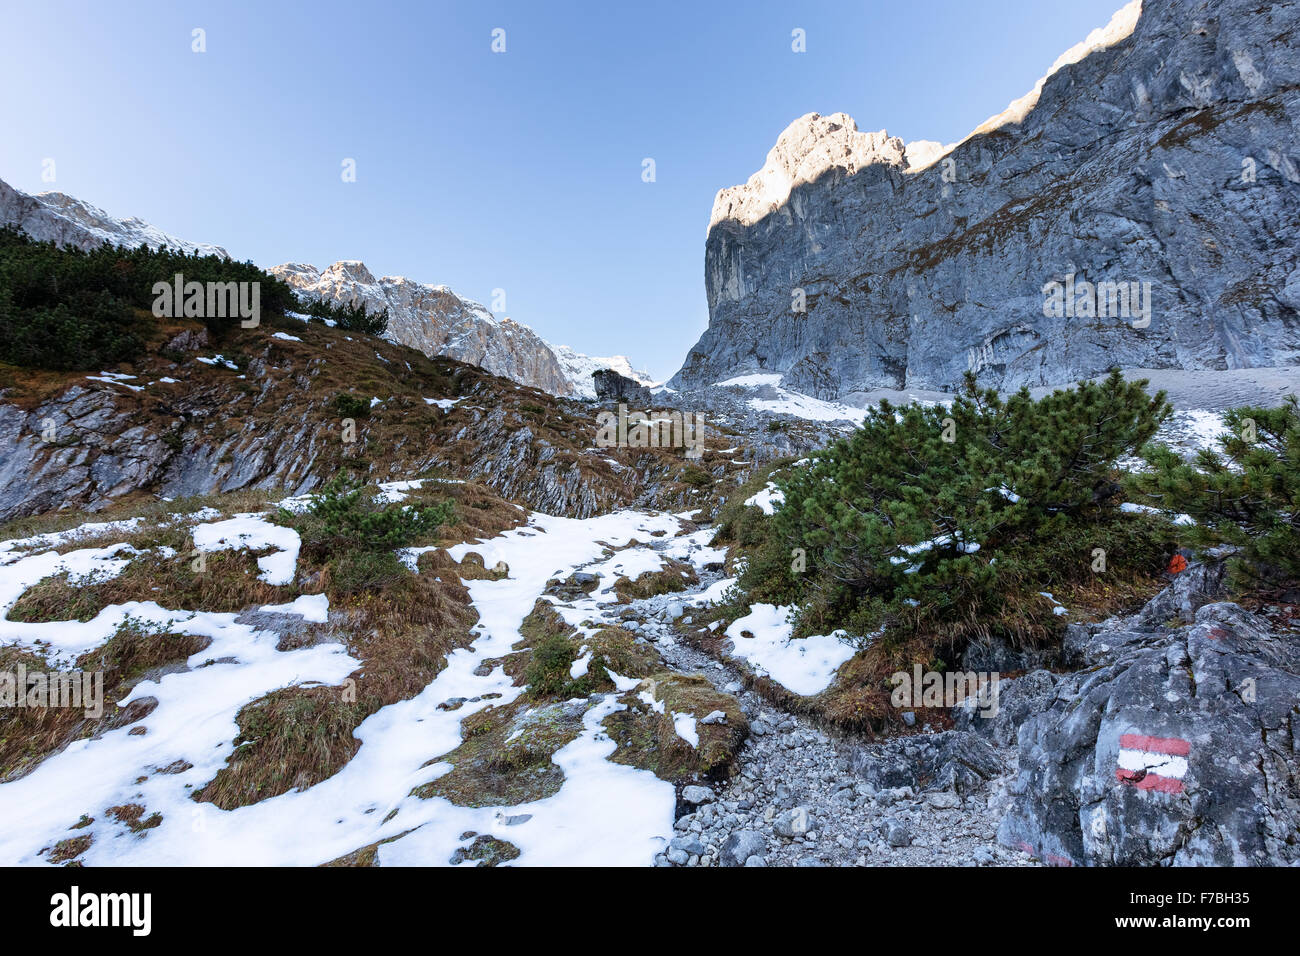 Climbing towards the summit of Zugspitze mountain, Garmisch-Partenkirchen, Germany, Alps, Europe, EU Stock Photo